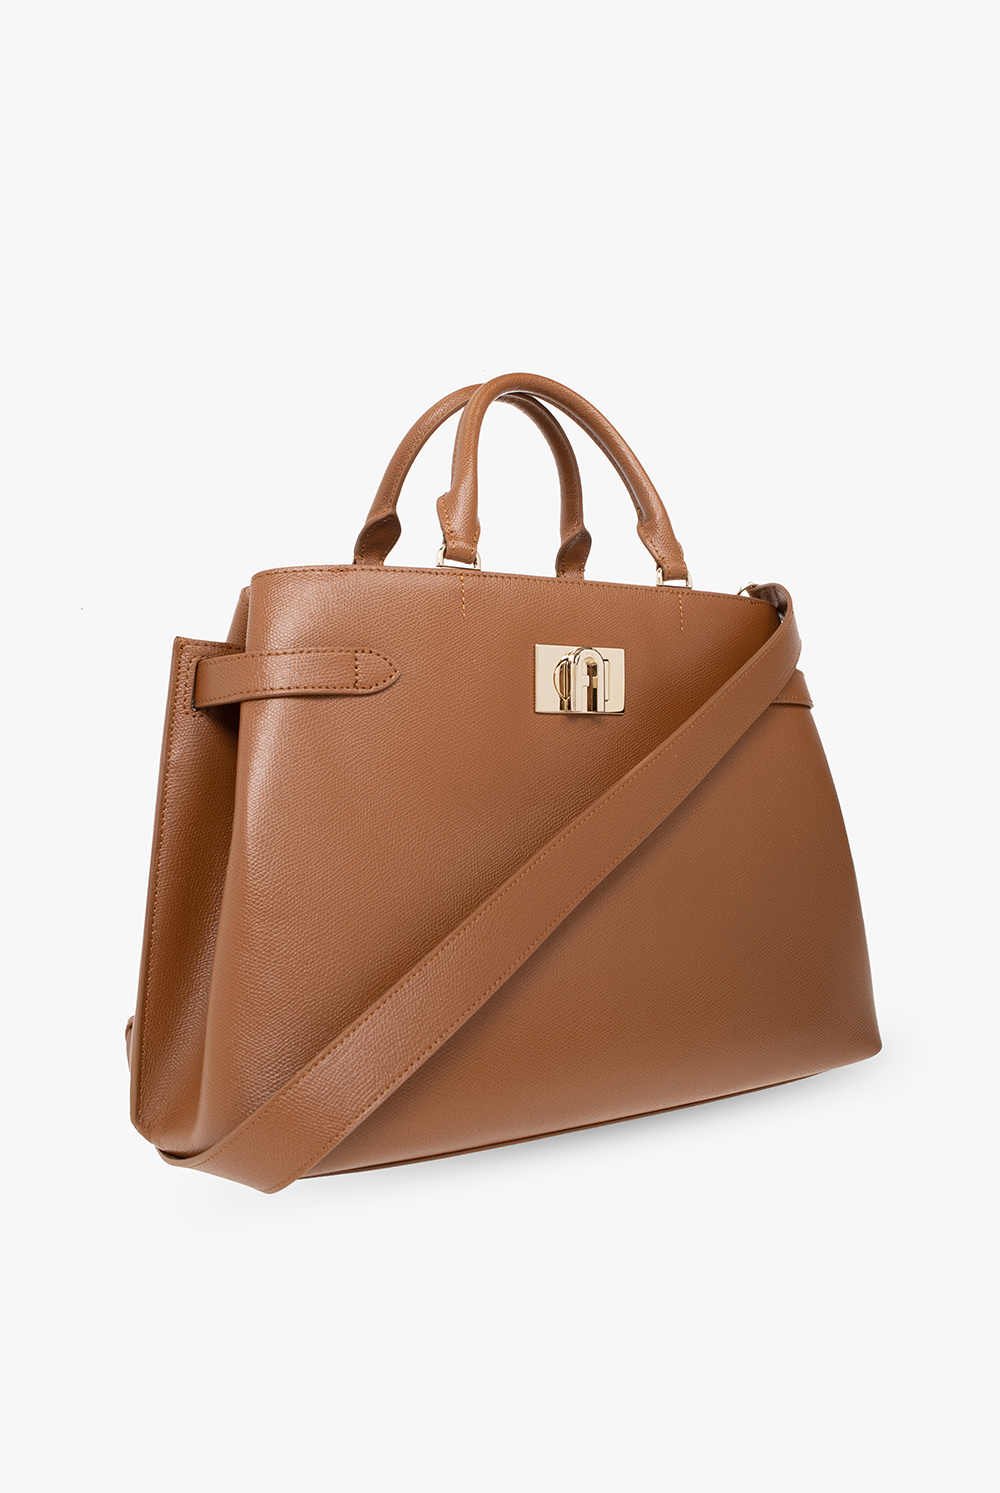 Furla ‘1927 Large’ handbag